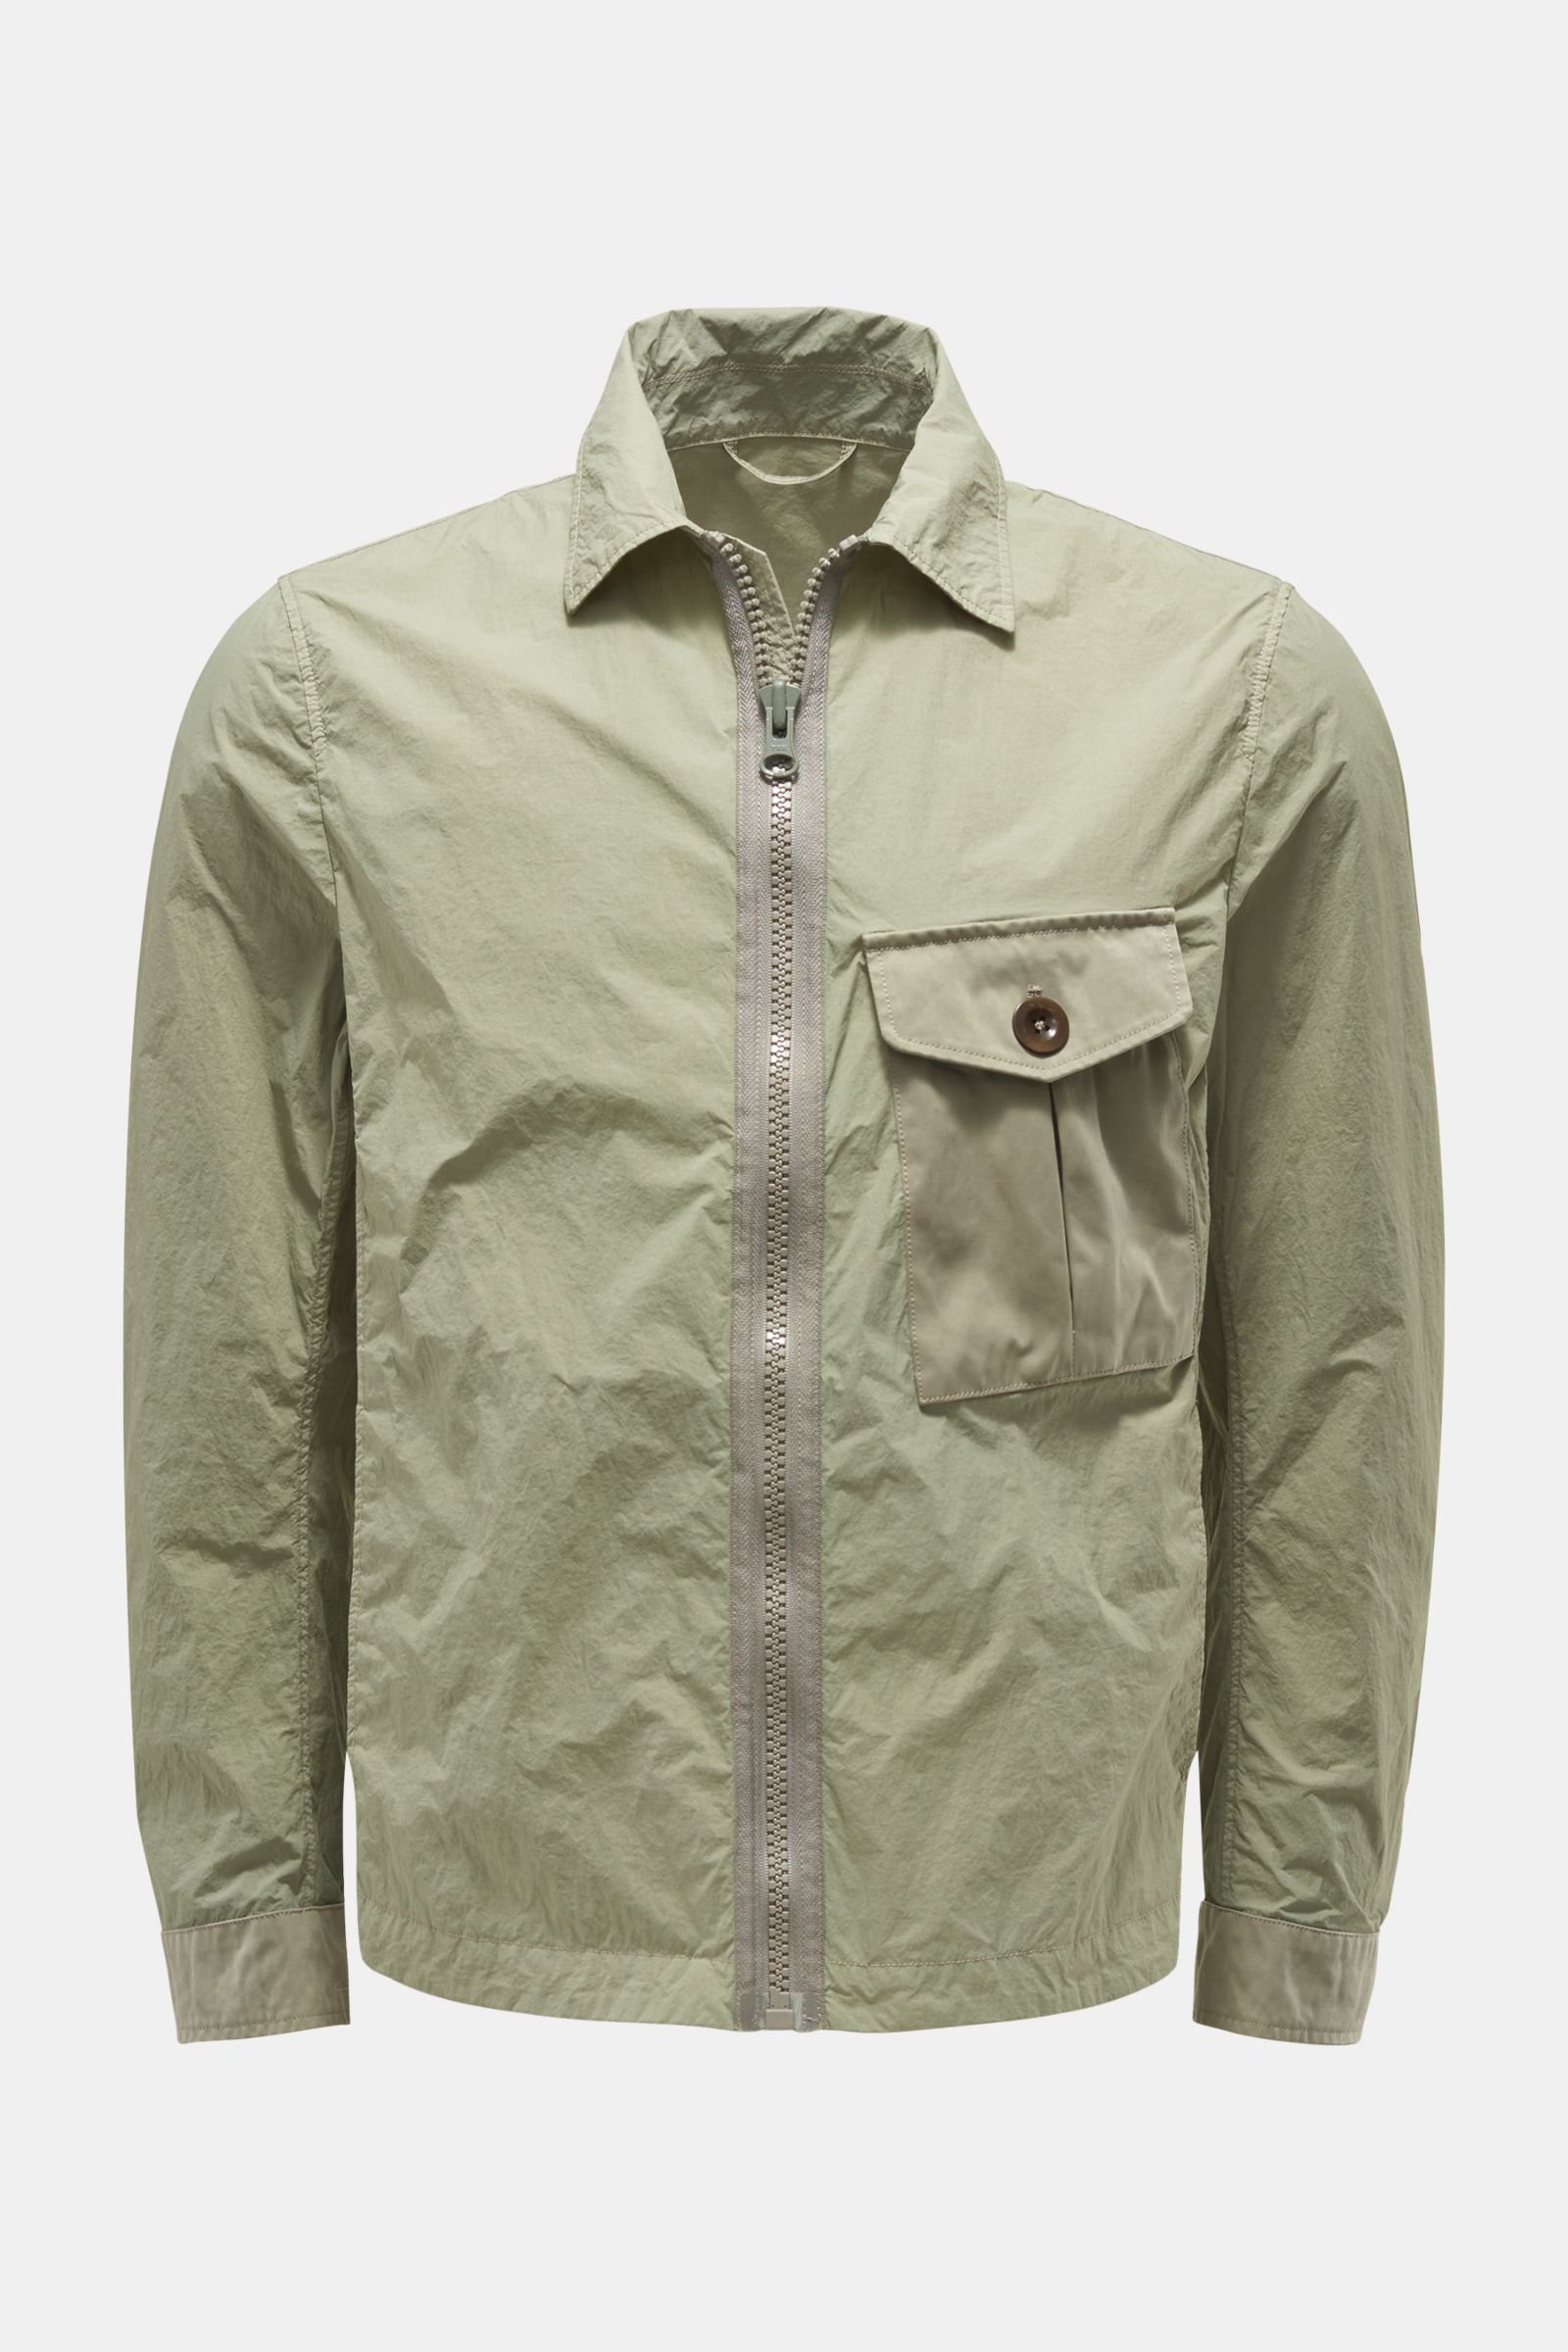 Jacket 'Mid Layer' grey-green